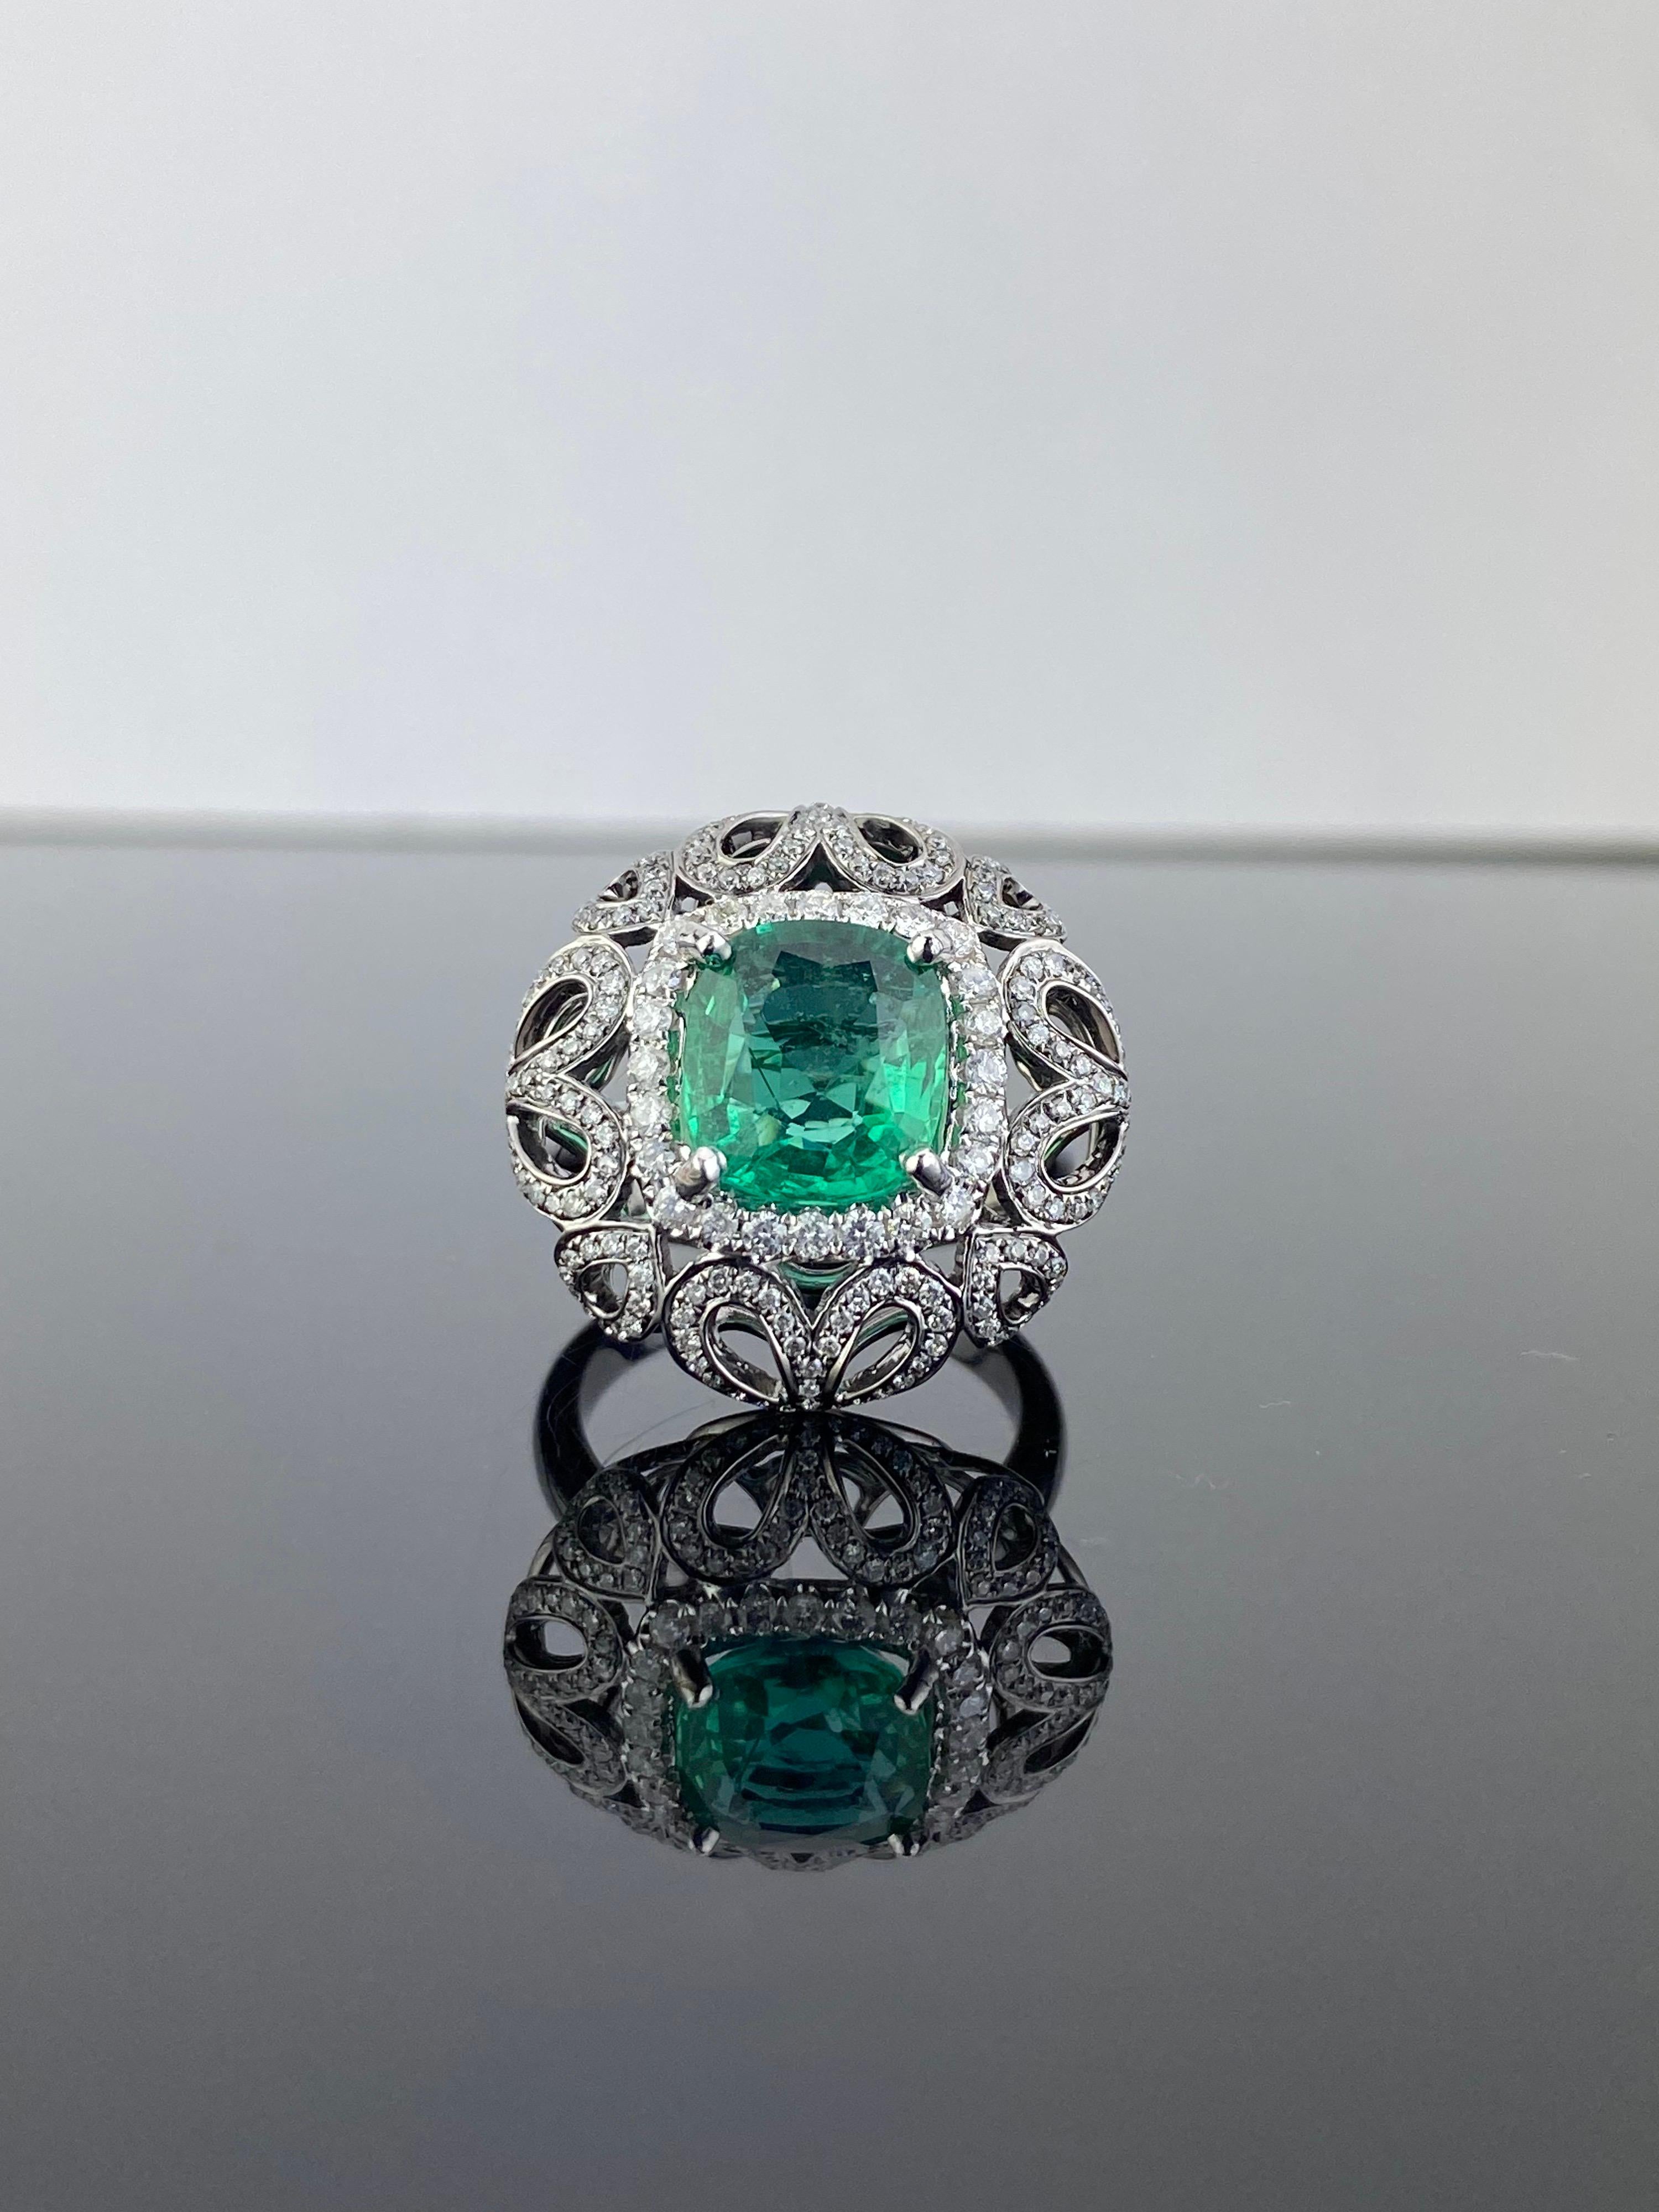 Art Deco 4.97 Carat Cushion Cut Zambian Emerald and Diamond Cocktail Ring For Sale